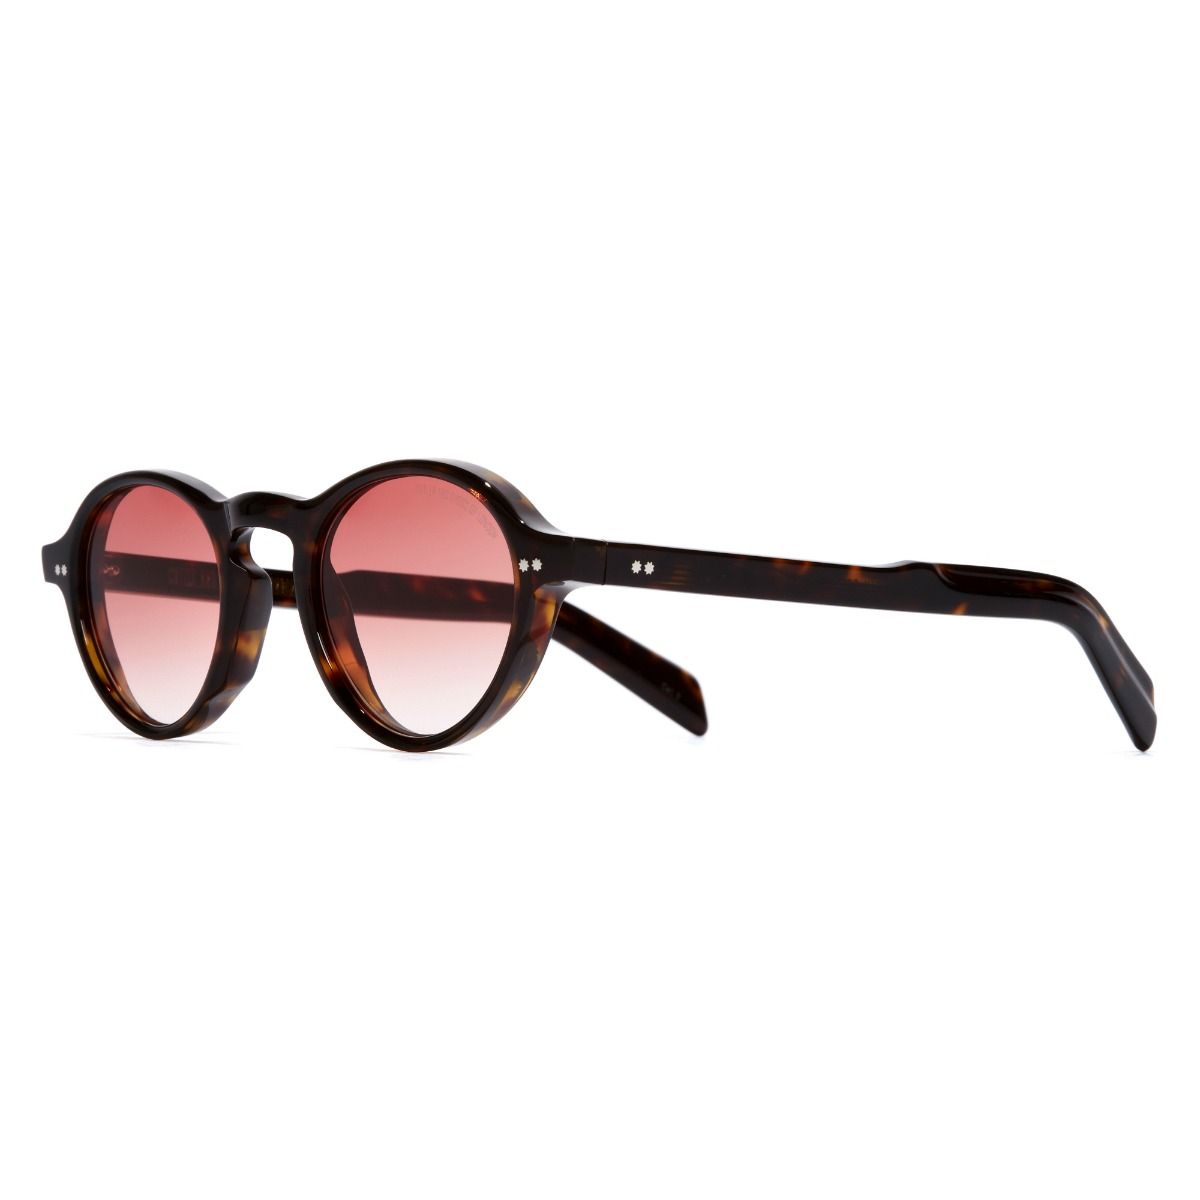 GR08 Round Sunglasses